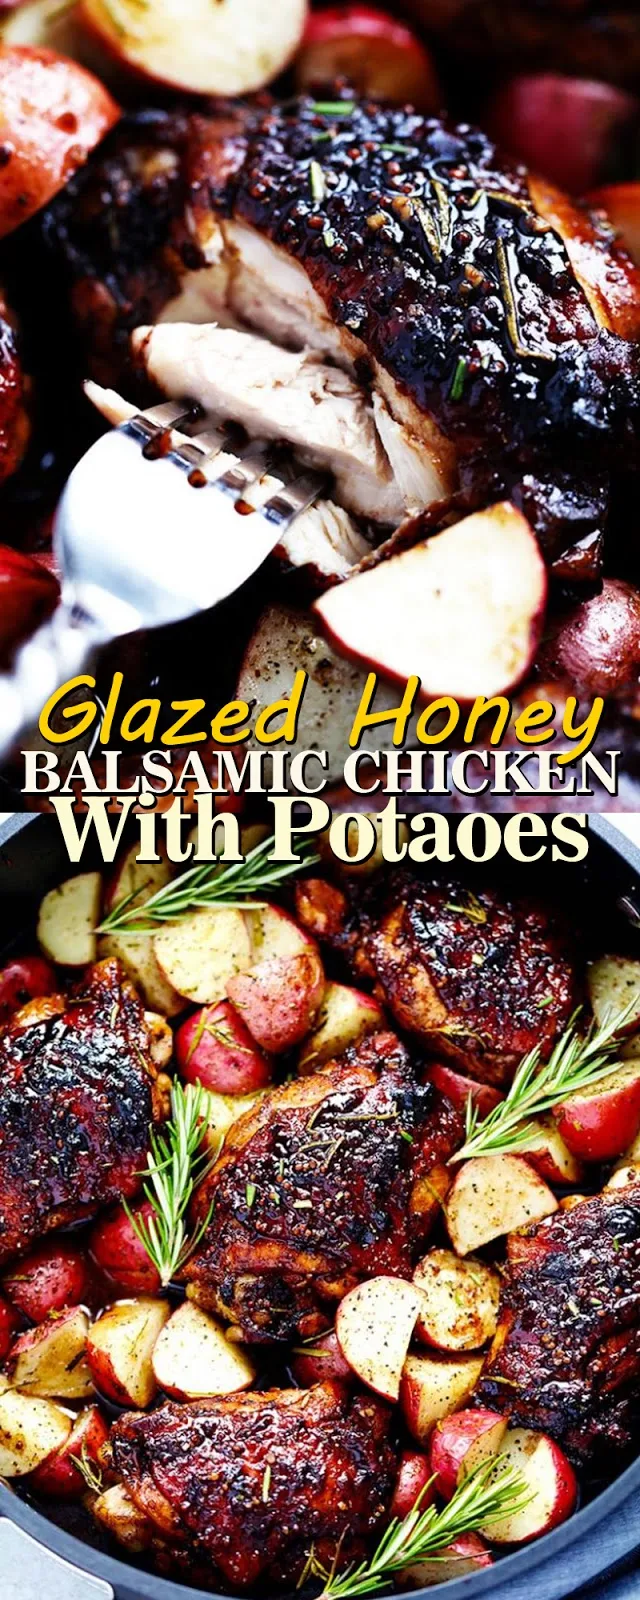 GLAZED HONEY BALSAMIC CHICKEN WITH POTATOES